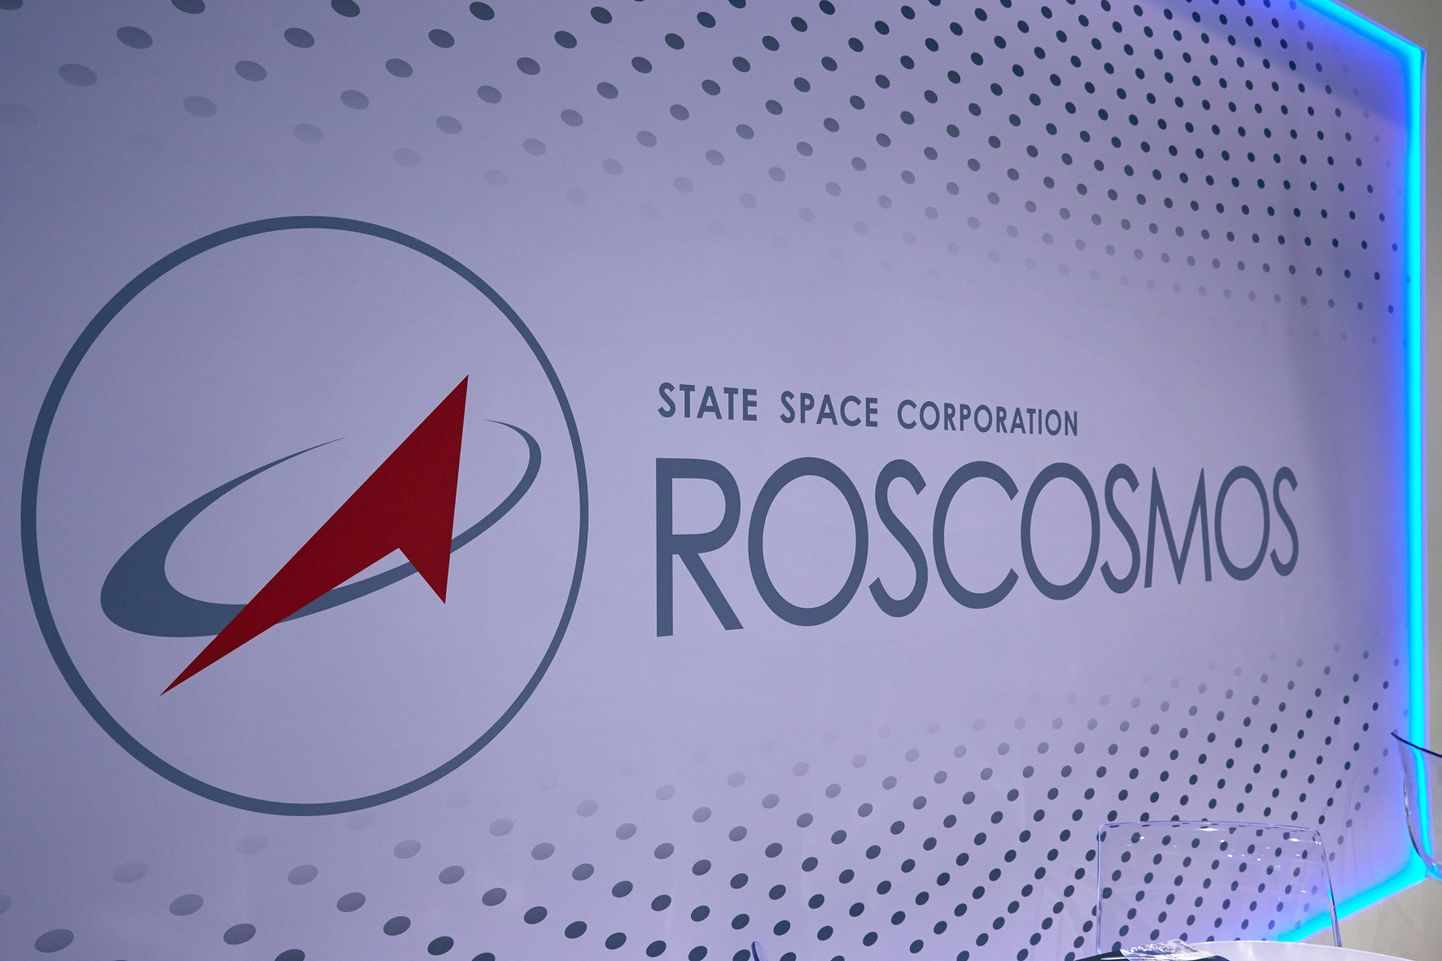 Vene kosmoseettevõtte Roskosmos logo.